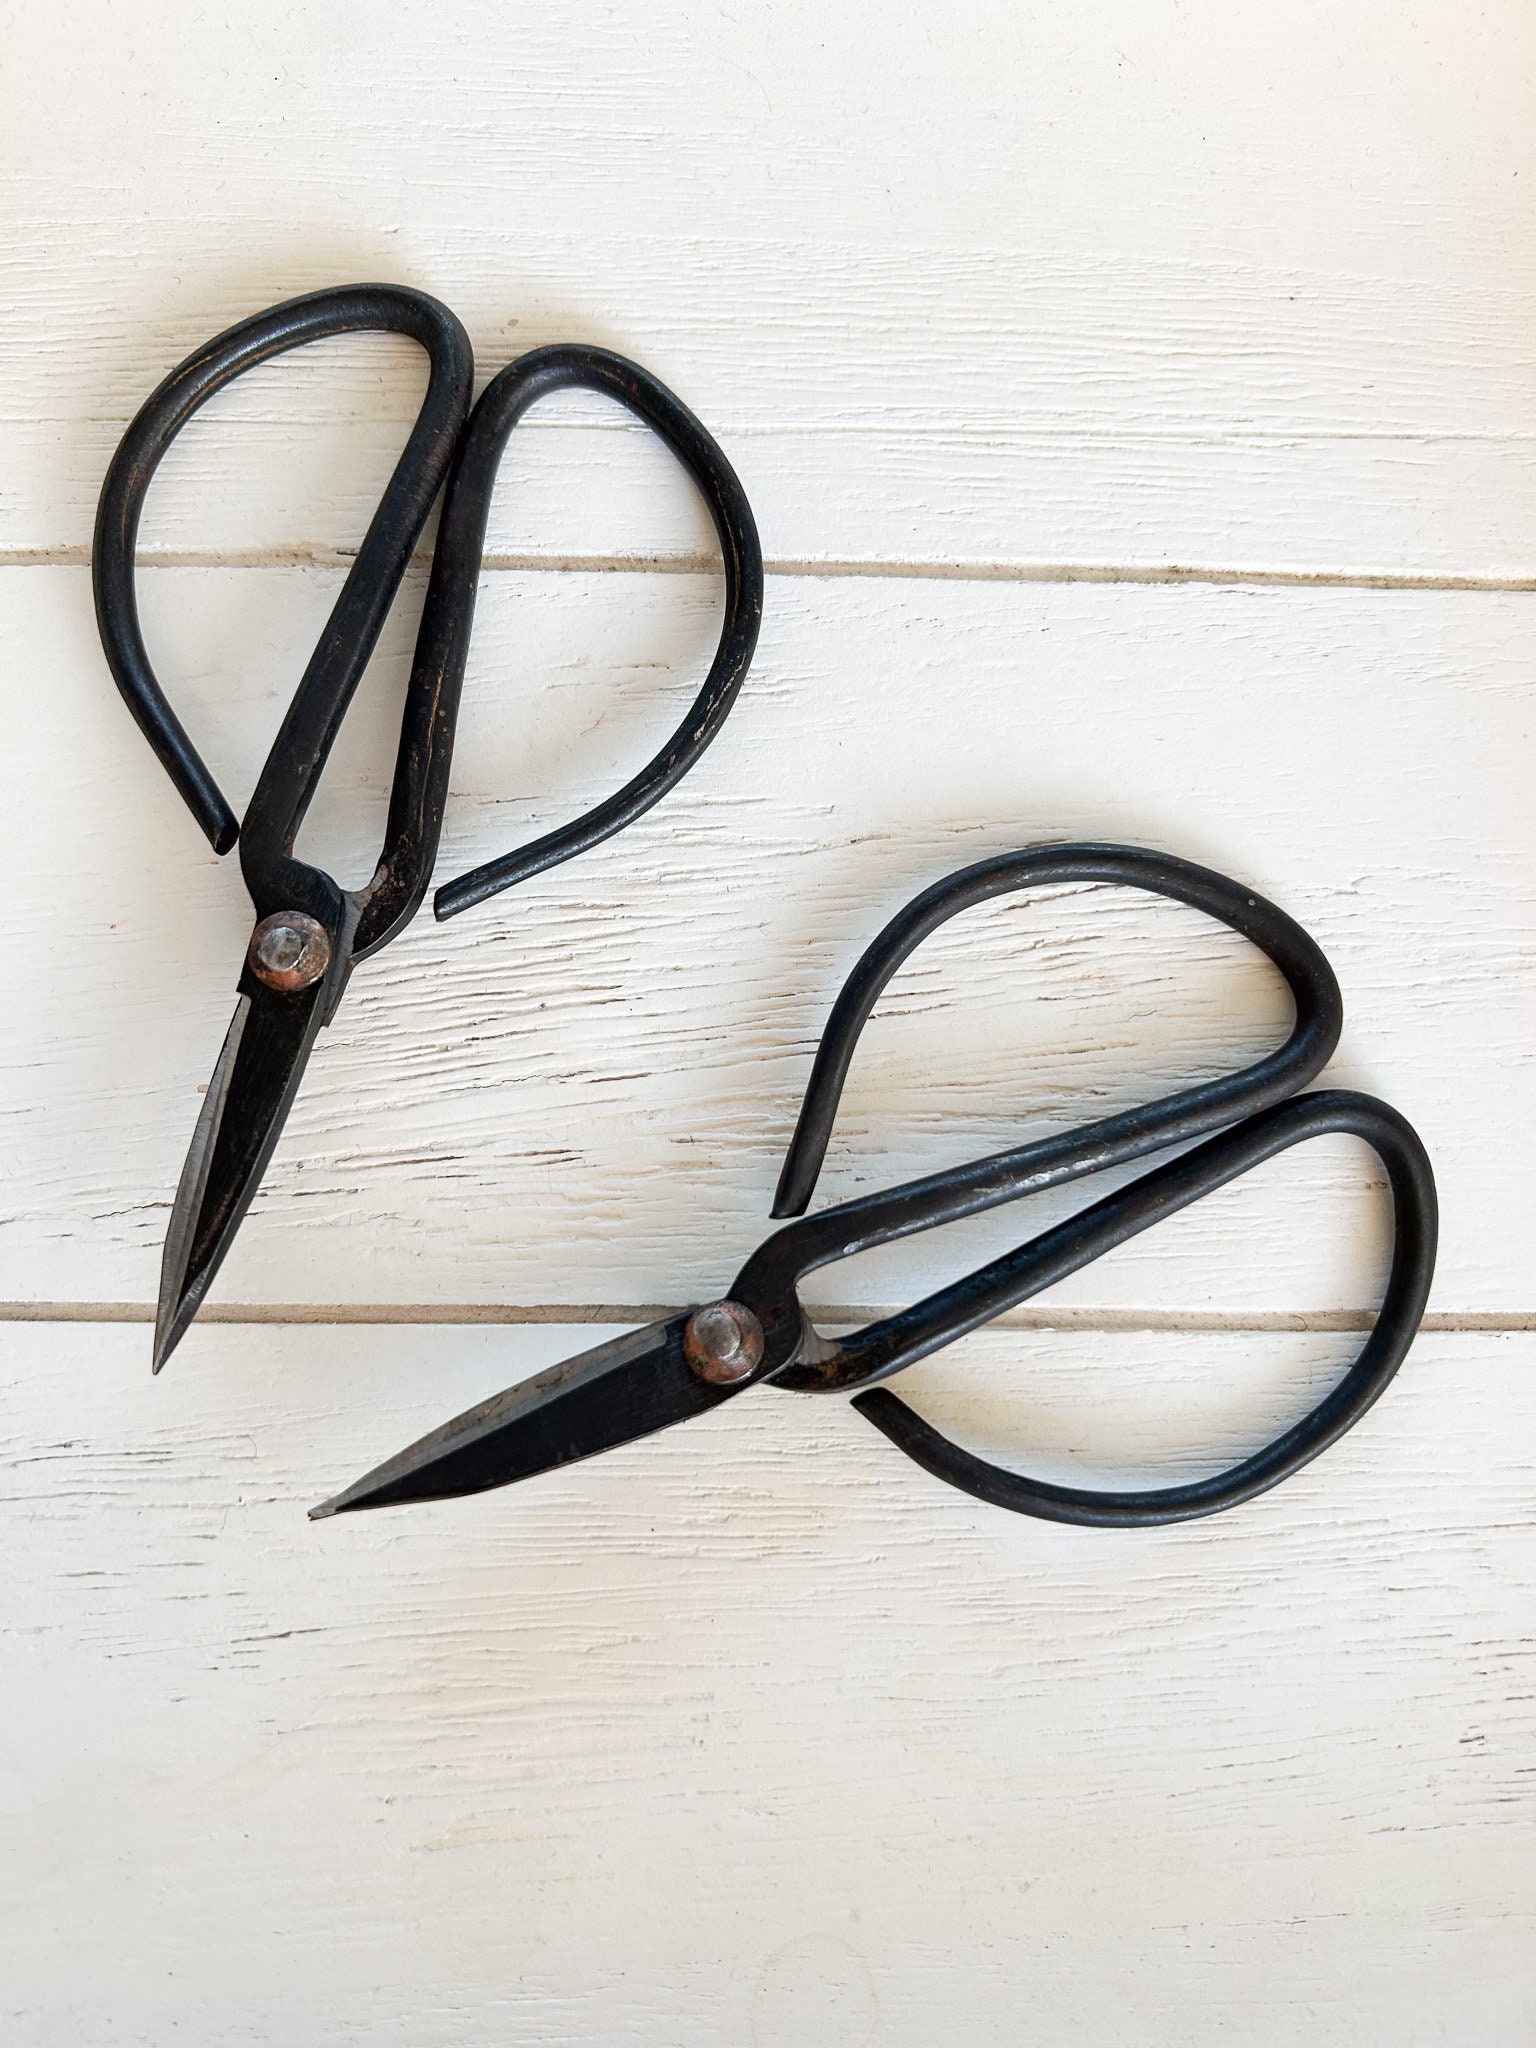 Vintage Large Metal Tailor's Scissors. Vintage Fabric Cutting Scissors.  Collectible Tailor's Scissors. 